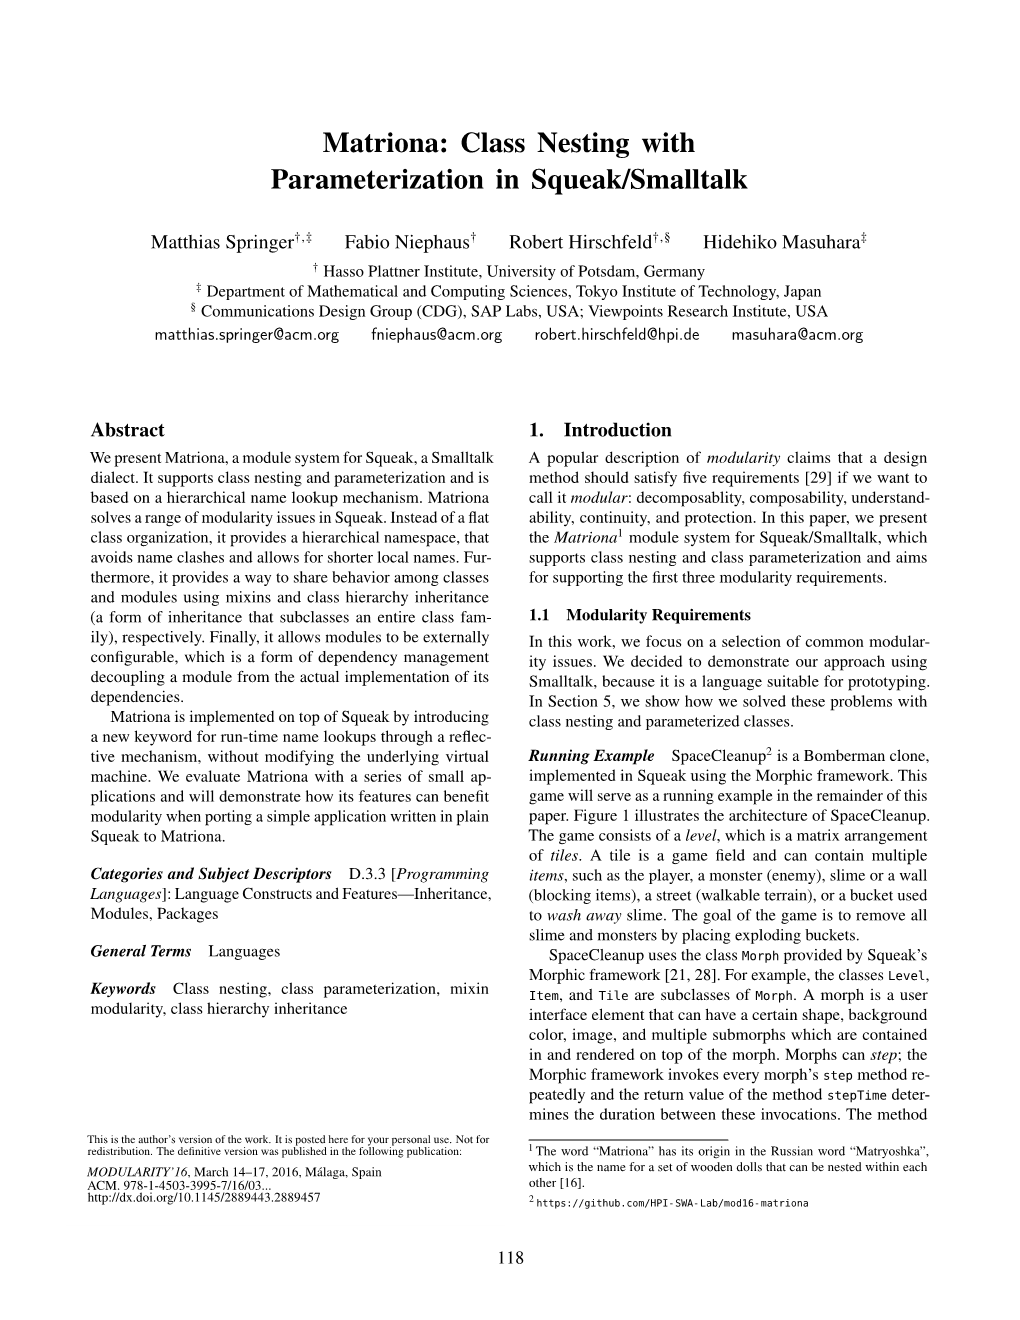 Matriona: Class Nesting with Parameterization in Squeak/Smalltalk